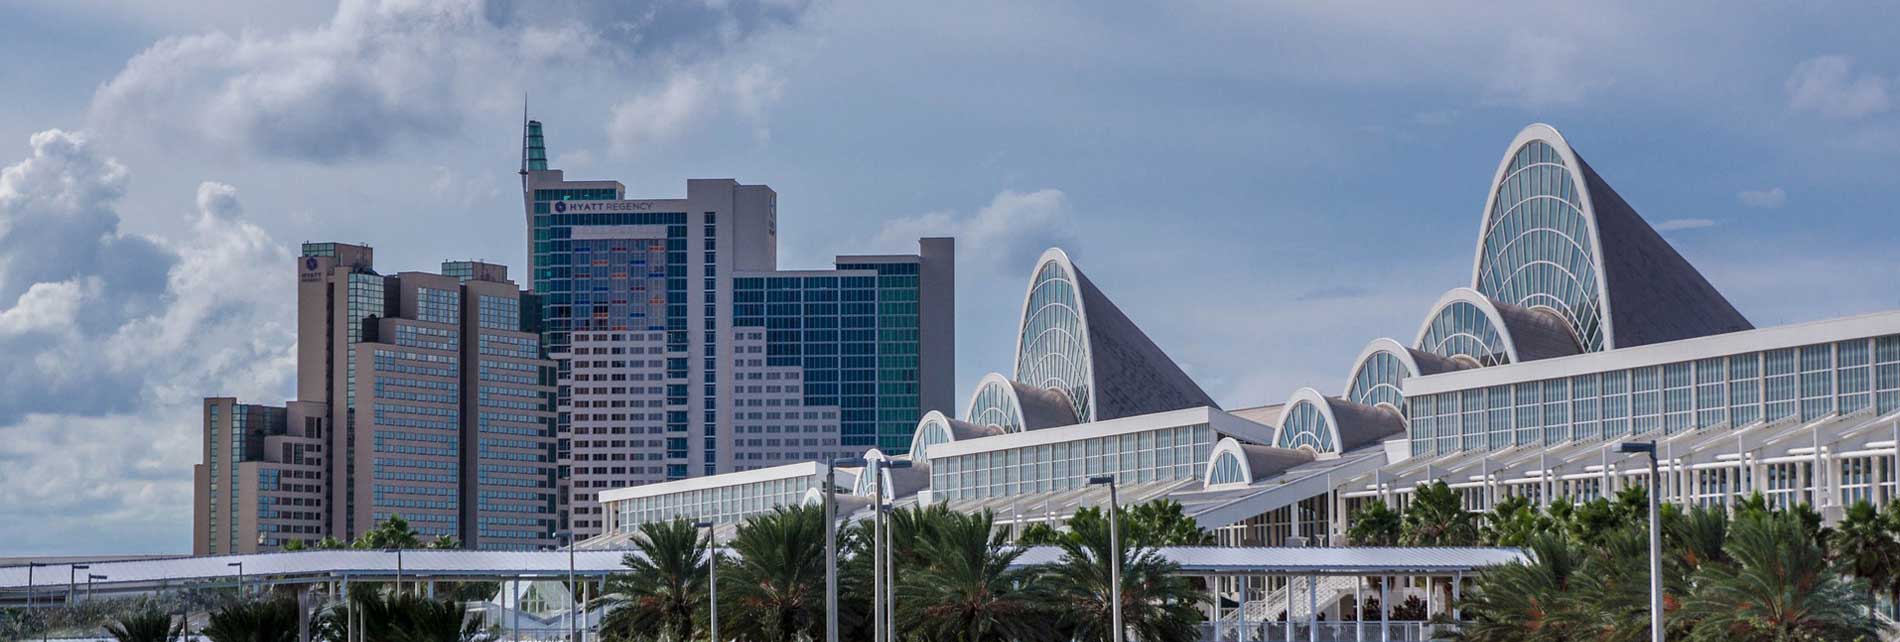 Orlando Convention Center hotel view